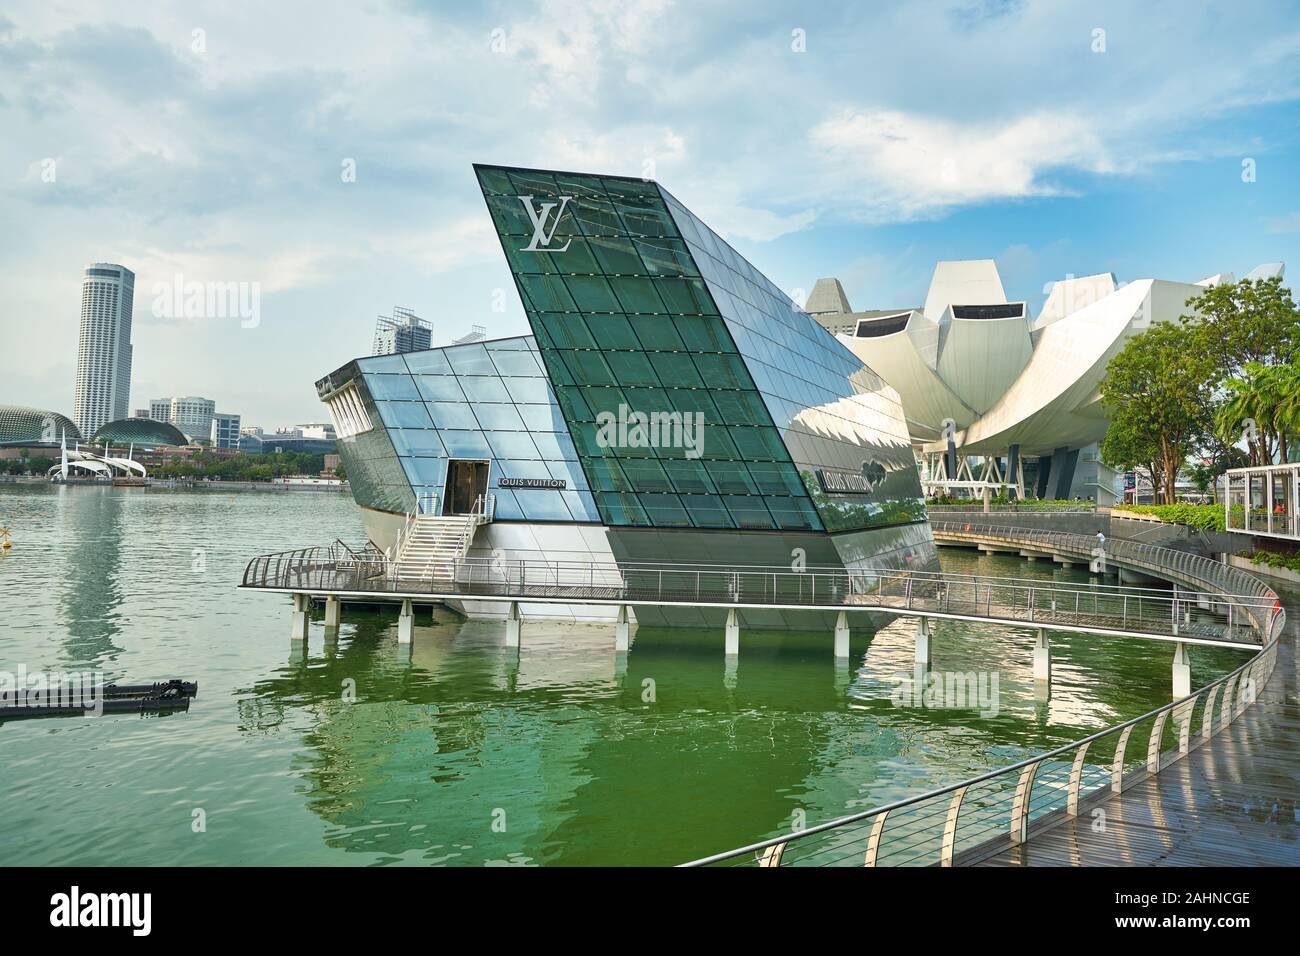 Louis Vuitton at Marina Bay Sands Editorial Stock Photo - Image of